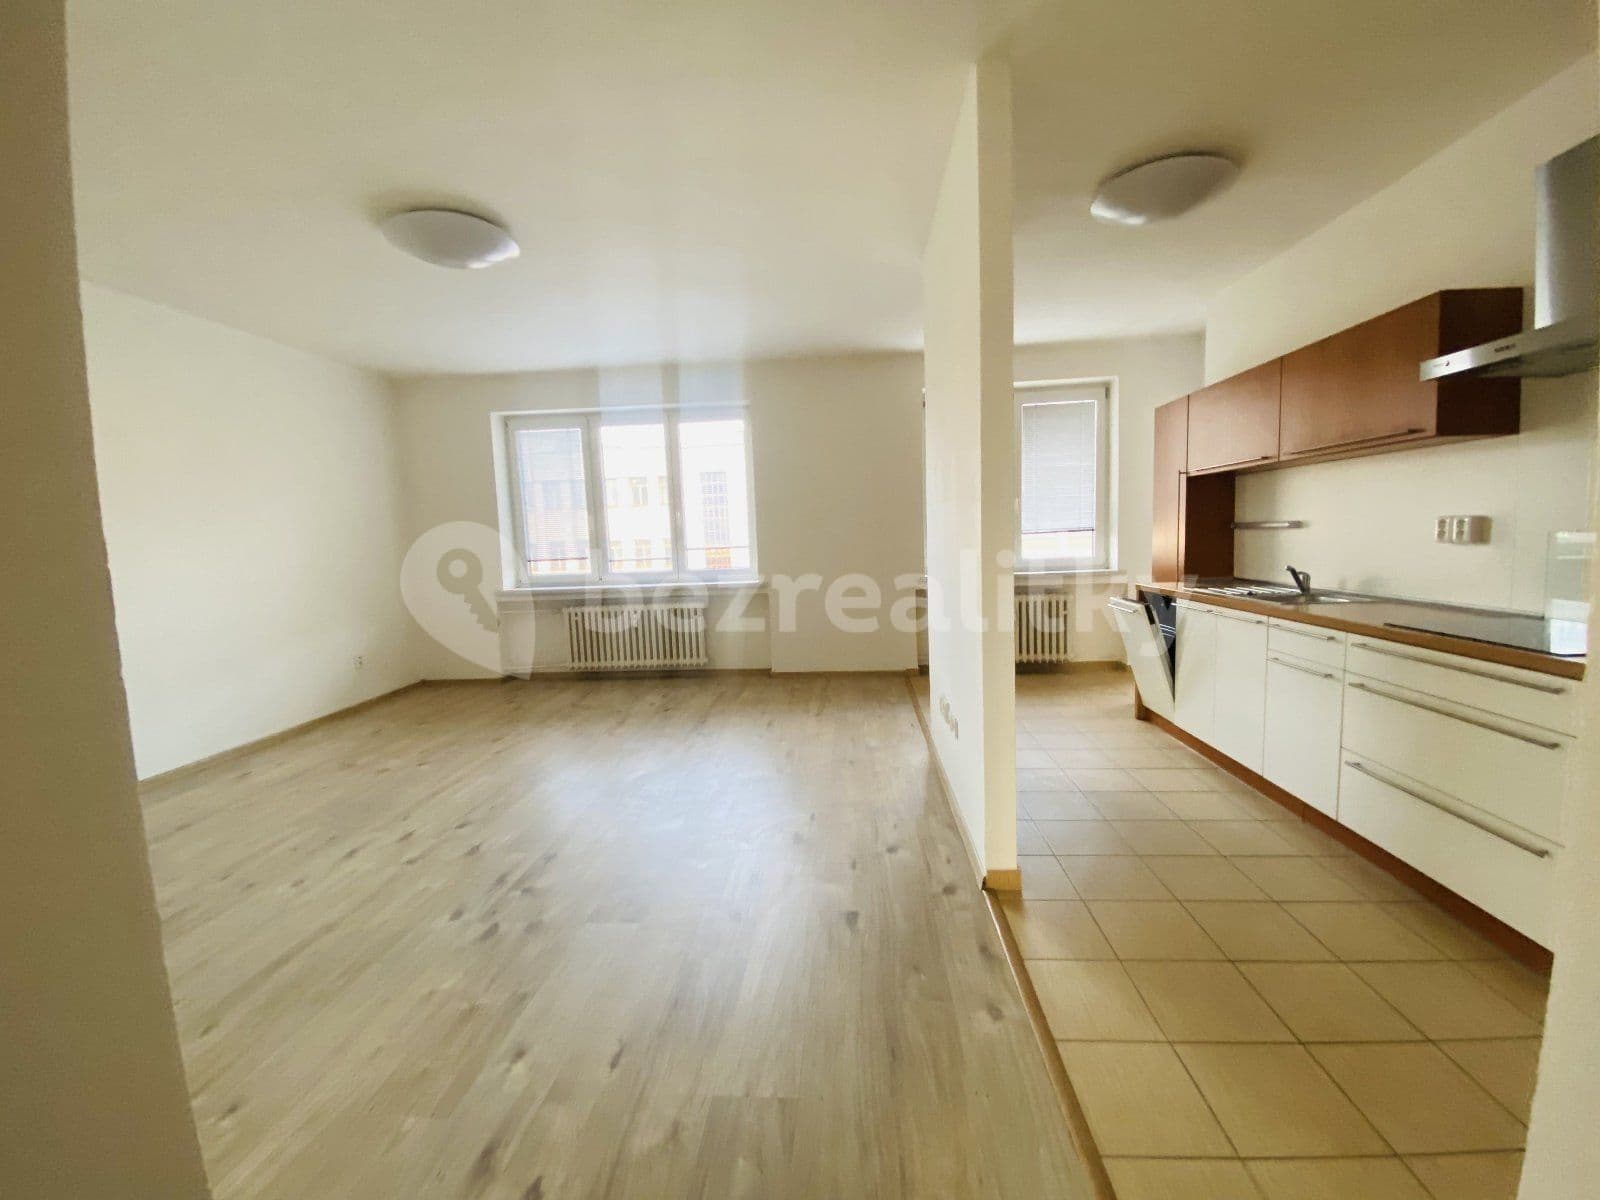 4 bedroom flat to rent, 97 m², Gregorova, Ostrava, Moravskoslezský Region